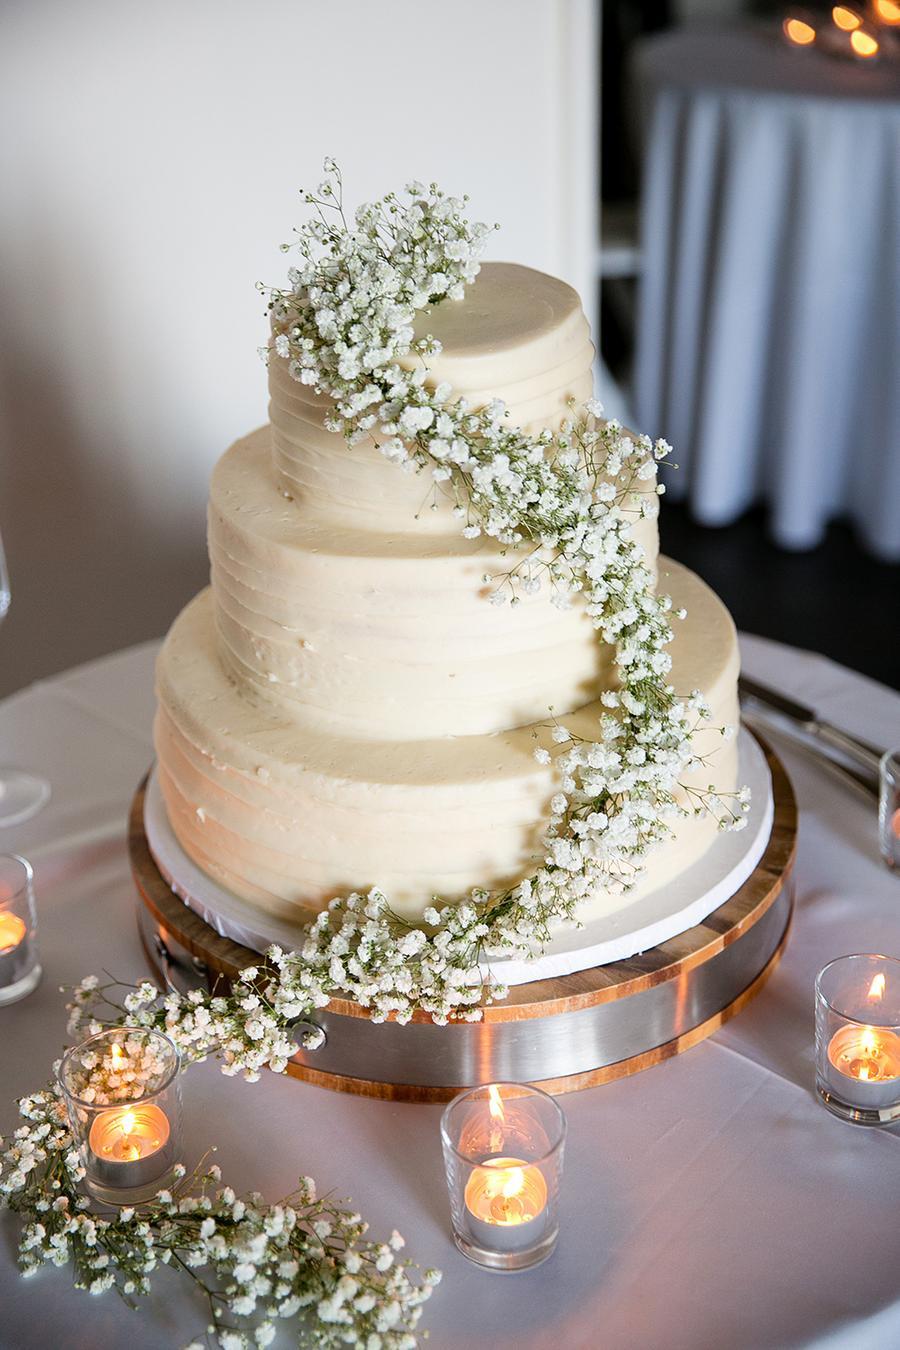 3 Tier Rustic Buttercream Wedding Cake | Susie's Cakes